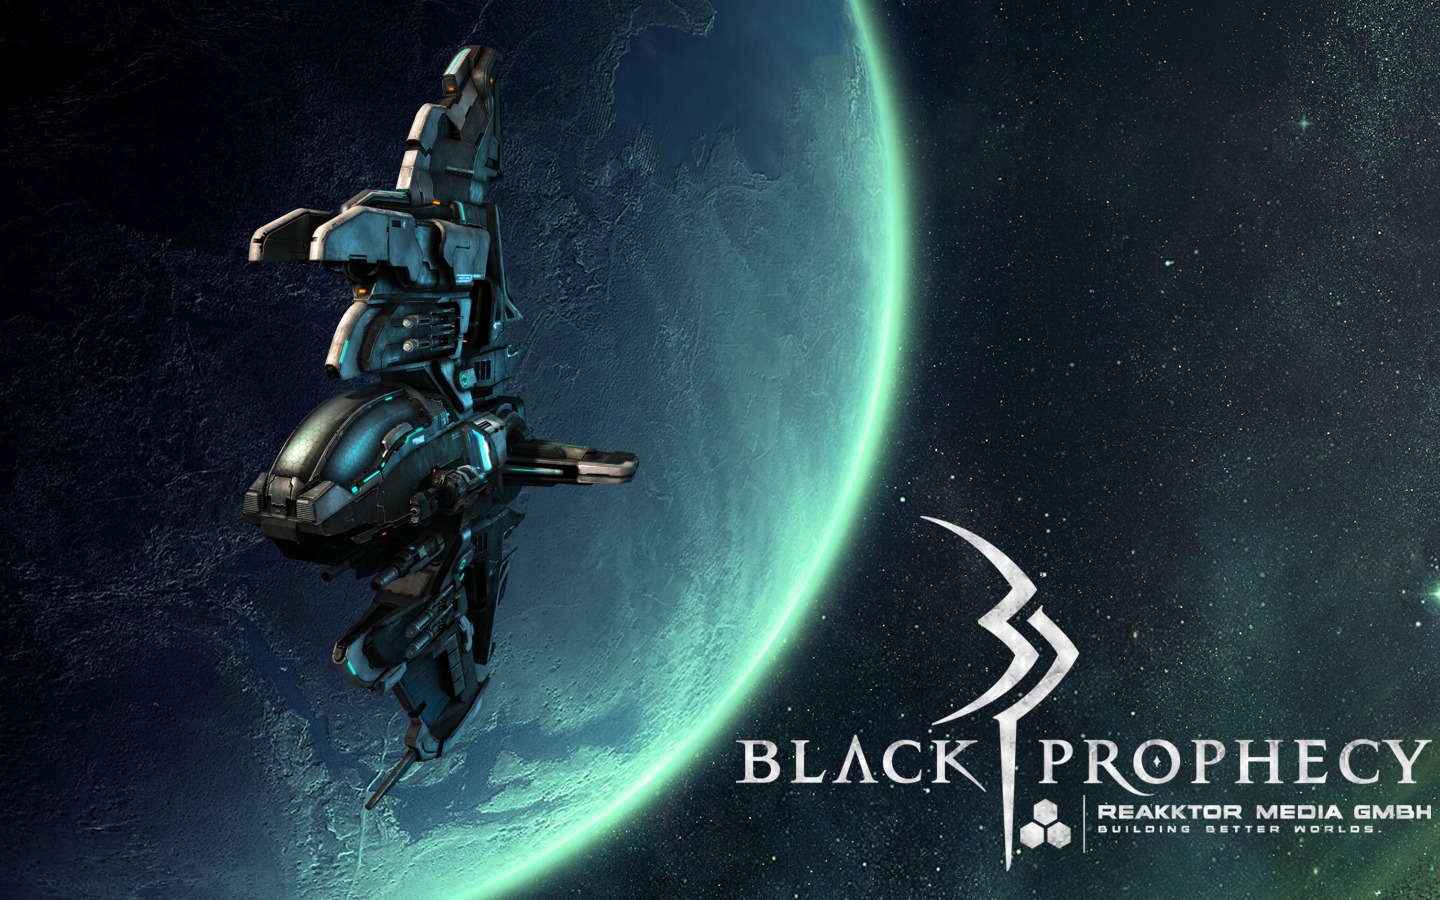 Black Prophecy #19